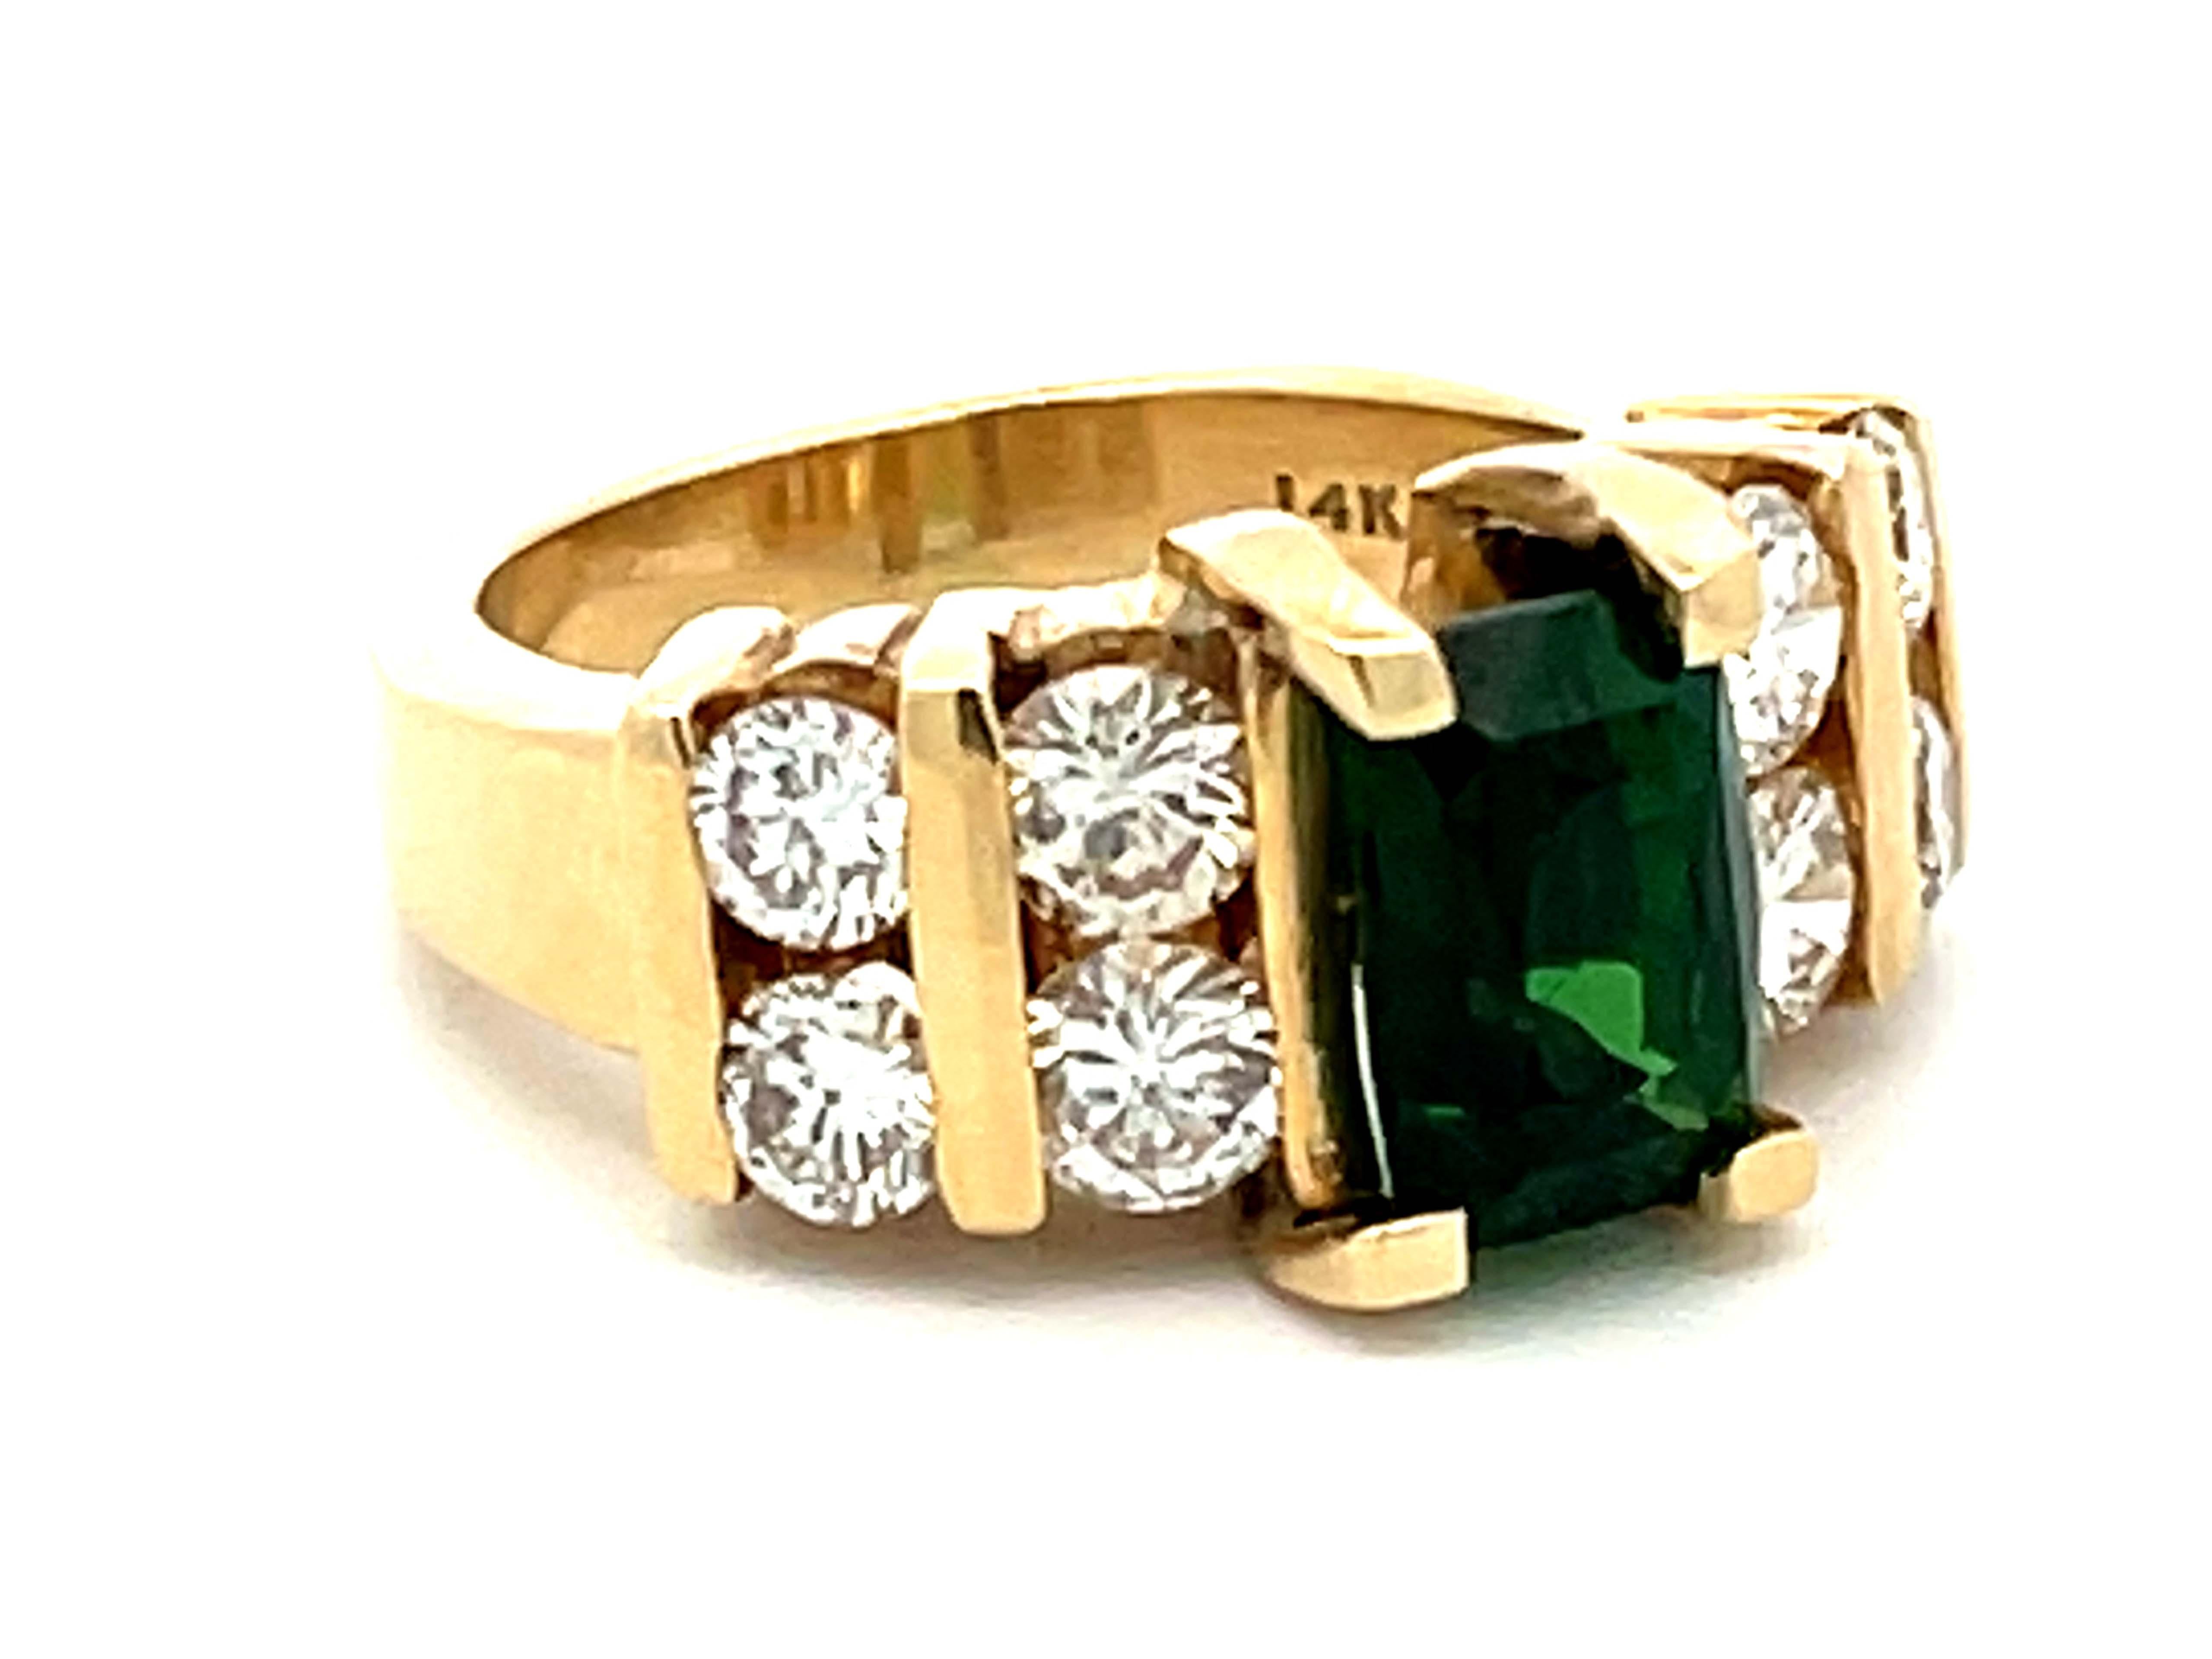 Cushion Cut GIA Green Tsavorite Garnet and Diamond Ring in 14k Yellow Gold For Sale